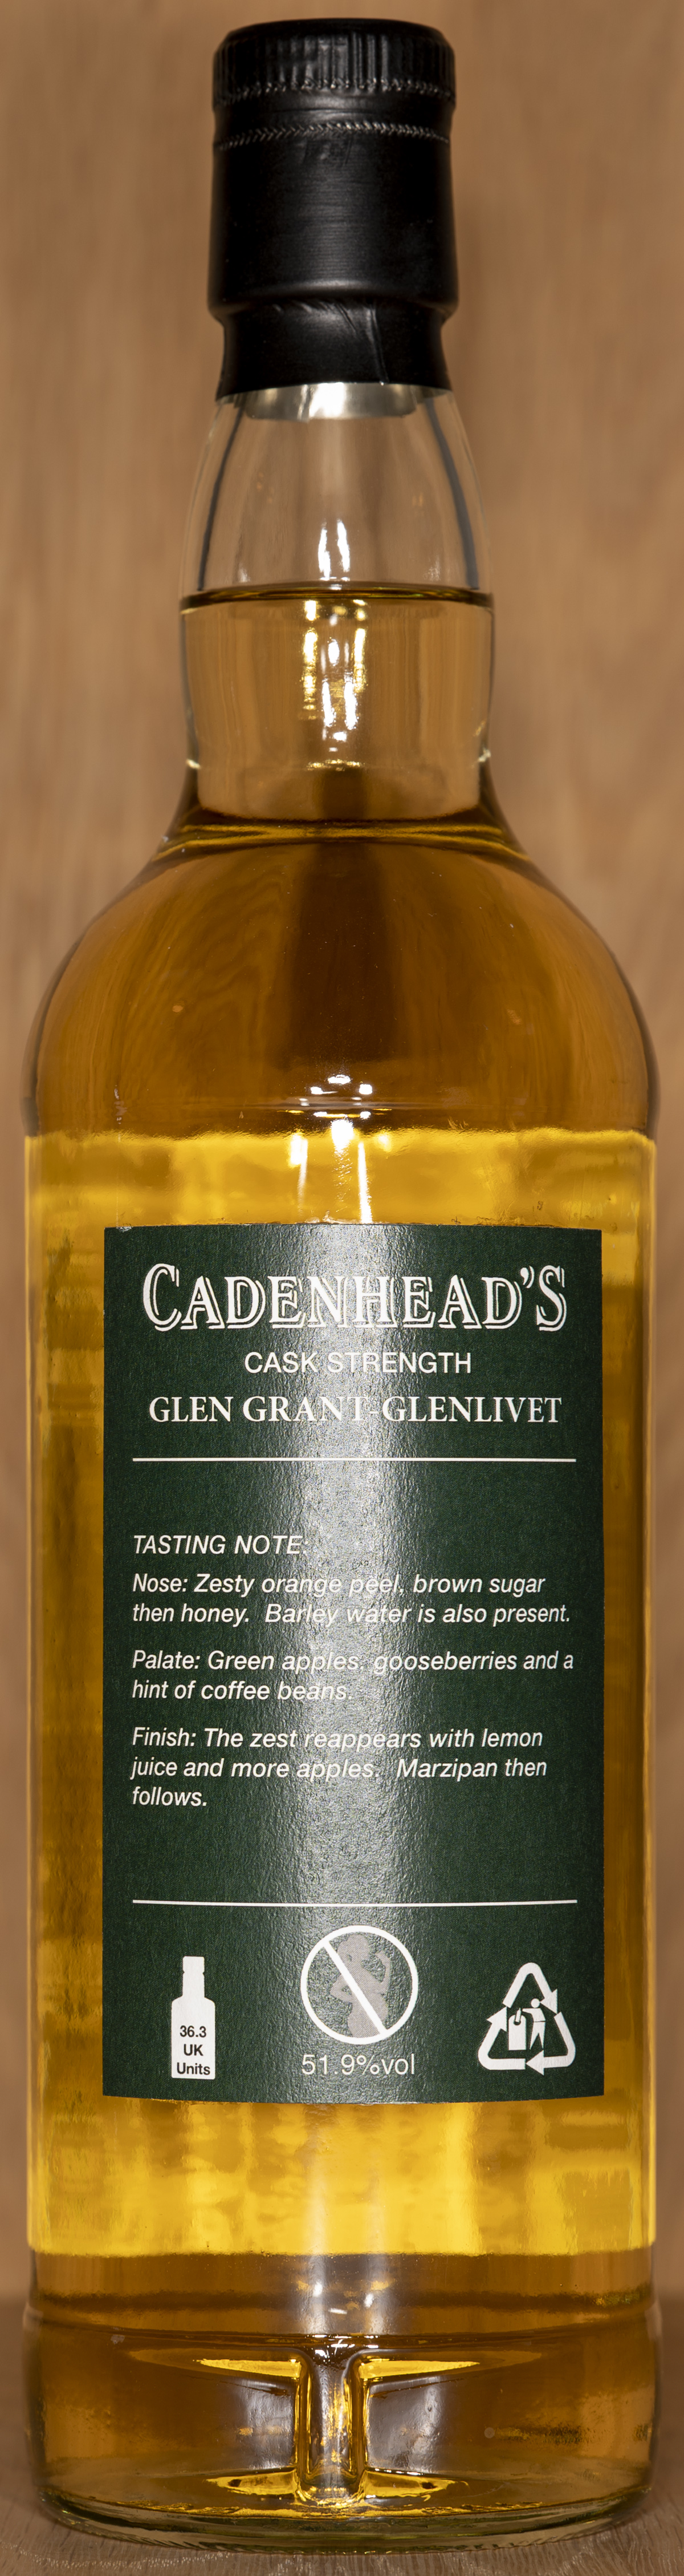 Billede: DSC_5021 - Cadenheads Authentic Collection Glen Grant 20 - bottle back.jpg